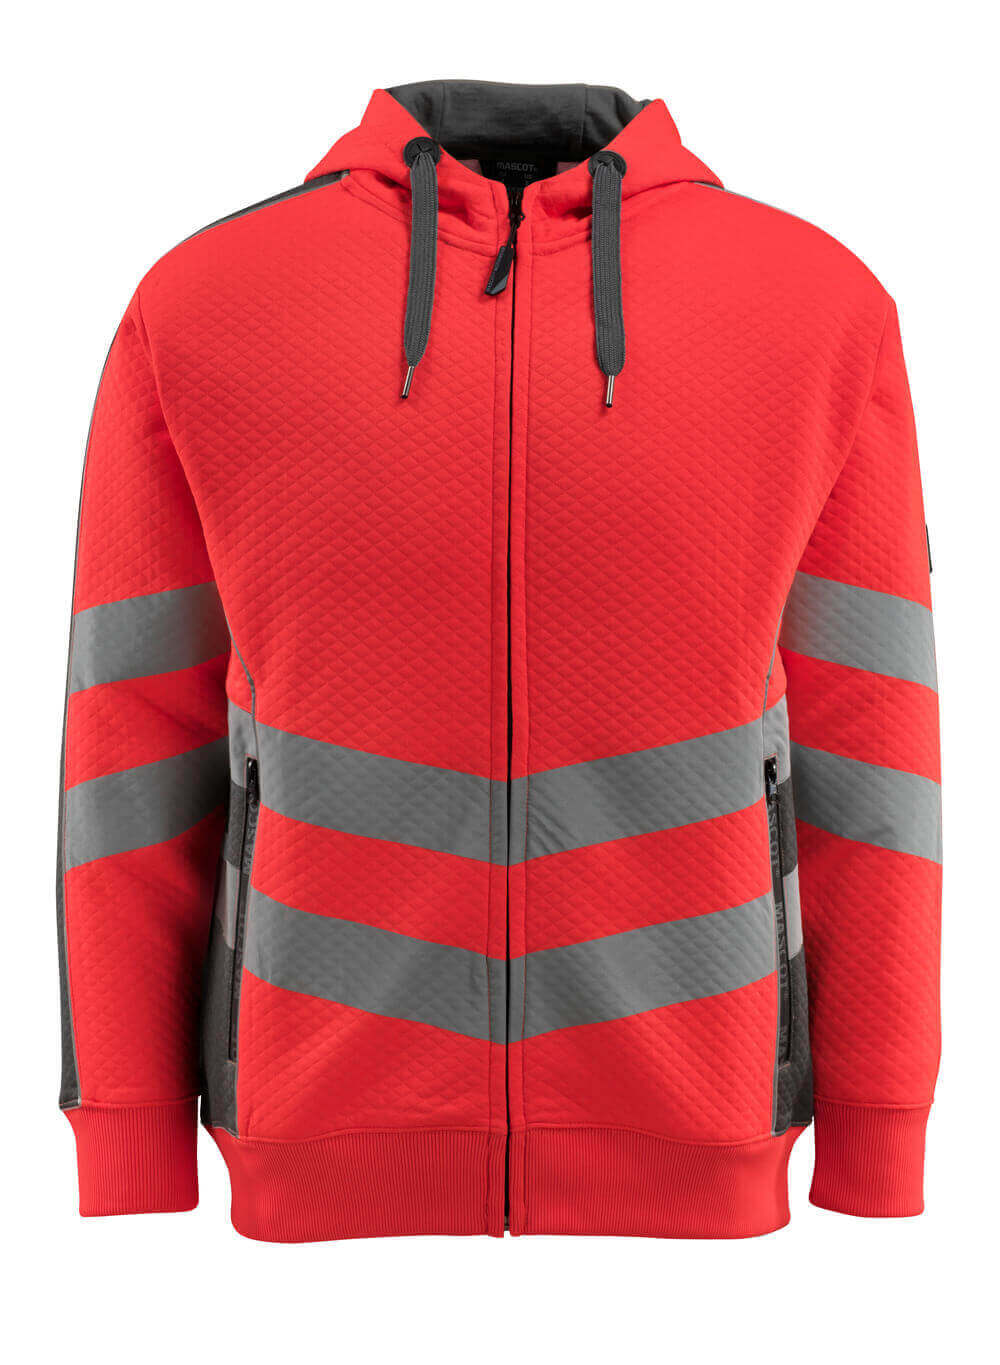 Kapuzensweatshirt mit Rei?verschluss SAFE SUPREME Kapuzensweatshirt mit Rei?verschluss in Farbe Hi-vis Rot/Dunkelanthrazit